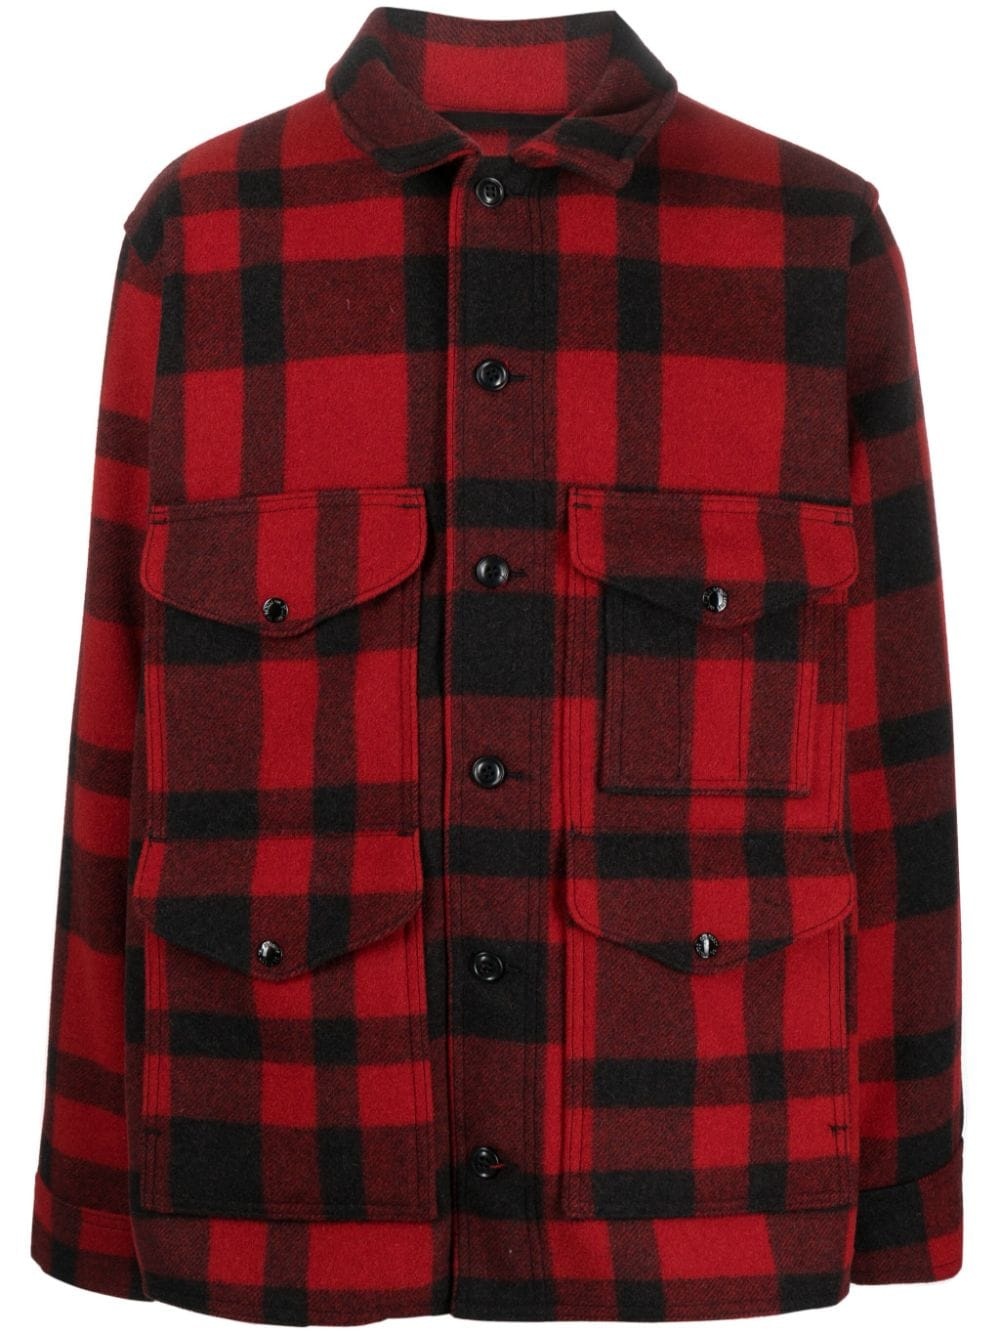 Mackinaw plaid wool shirt jacket - 1